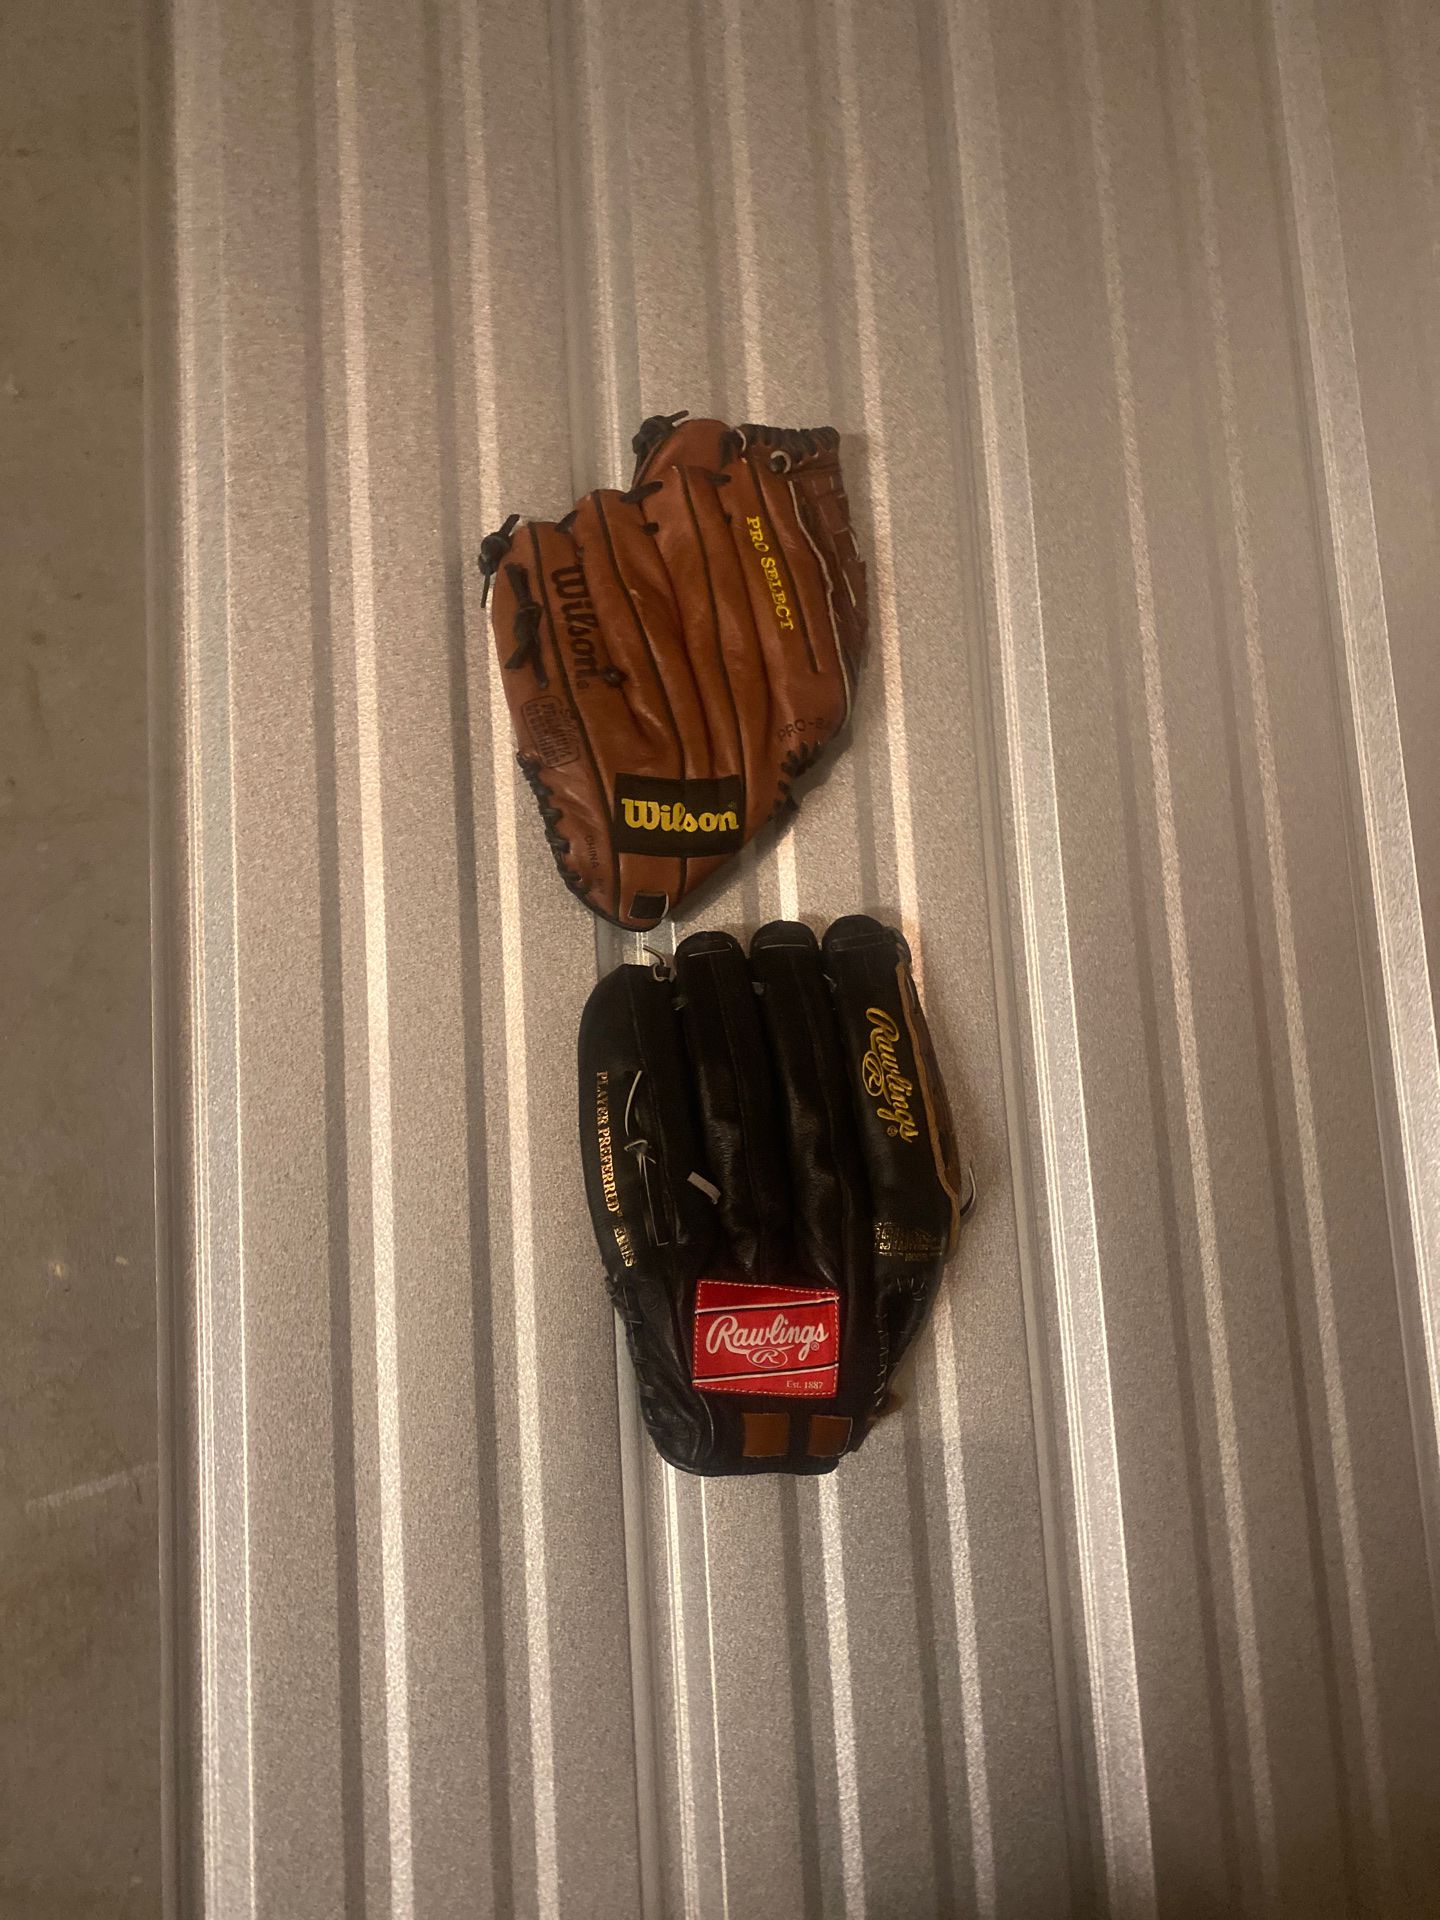 Rwalings and wilson baseball glove